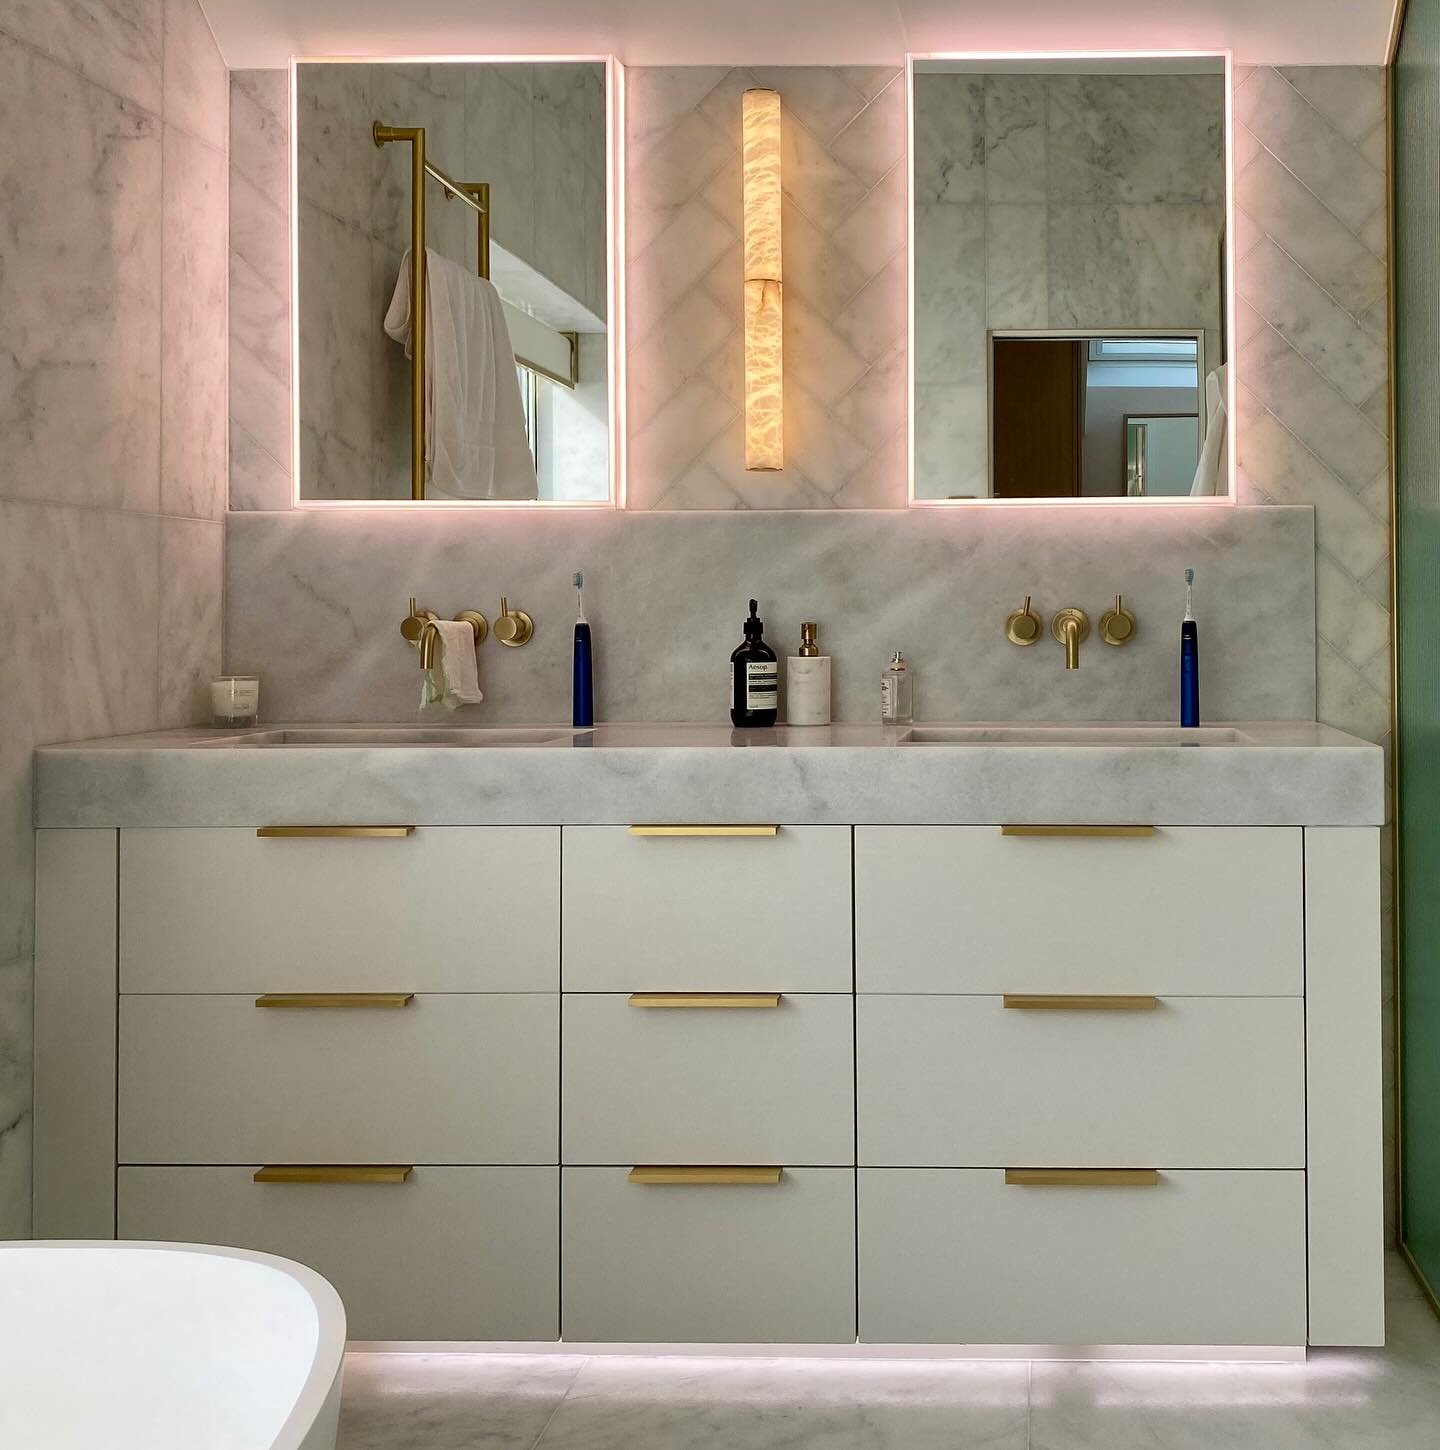 Bathroom goals 🫧✨
Interior Designer @falchiinteriors 
.
.
.
#bathroominspo #luxurybathroom #bespokebathroomcabinetry #bespokejoinery #beautifulbathroomcabinetry #furnituremaker #bespokefurniture #luxuryjoinery #buckinghamshirefurnituremaker